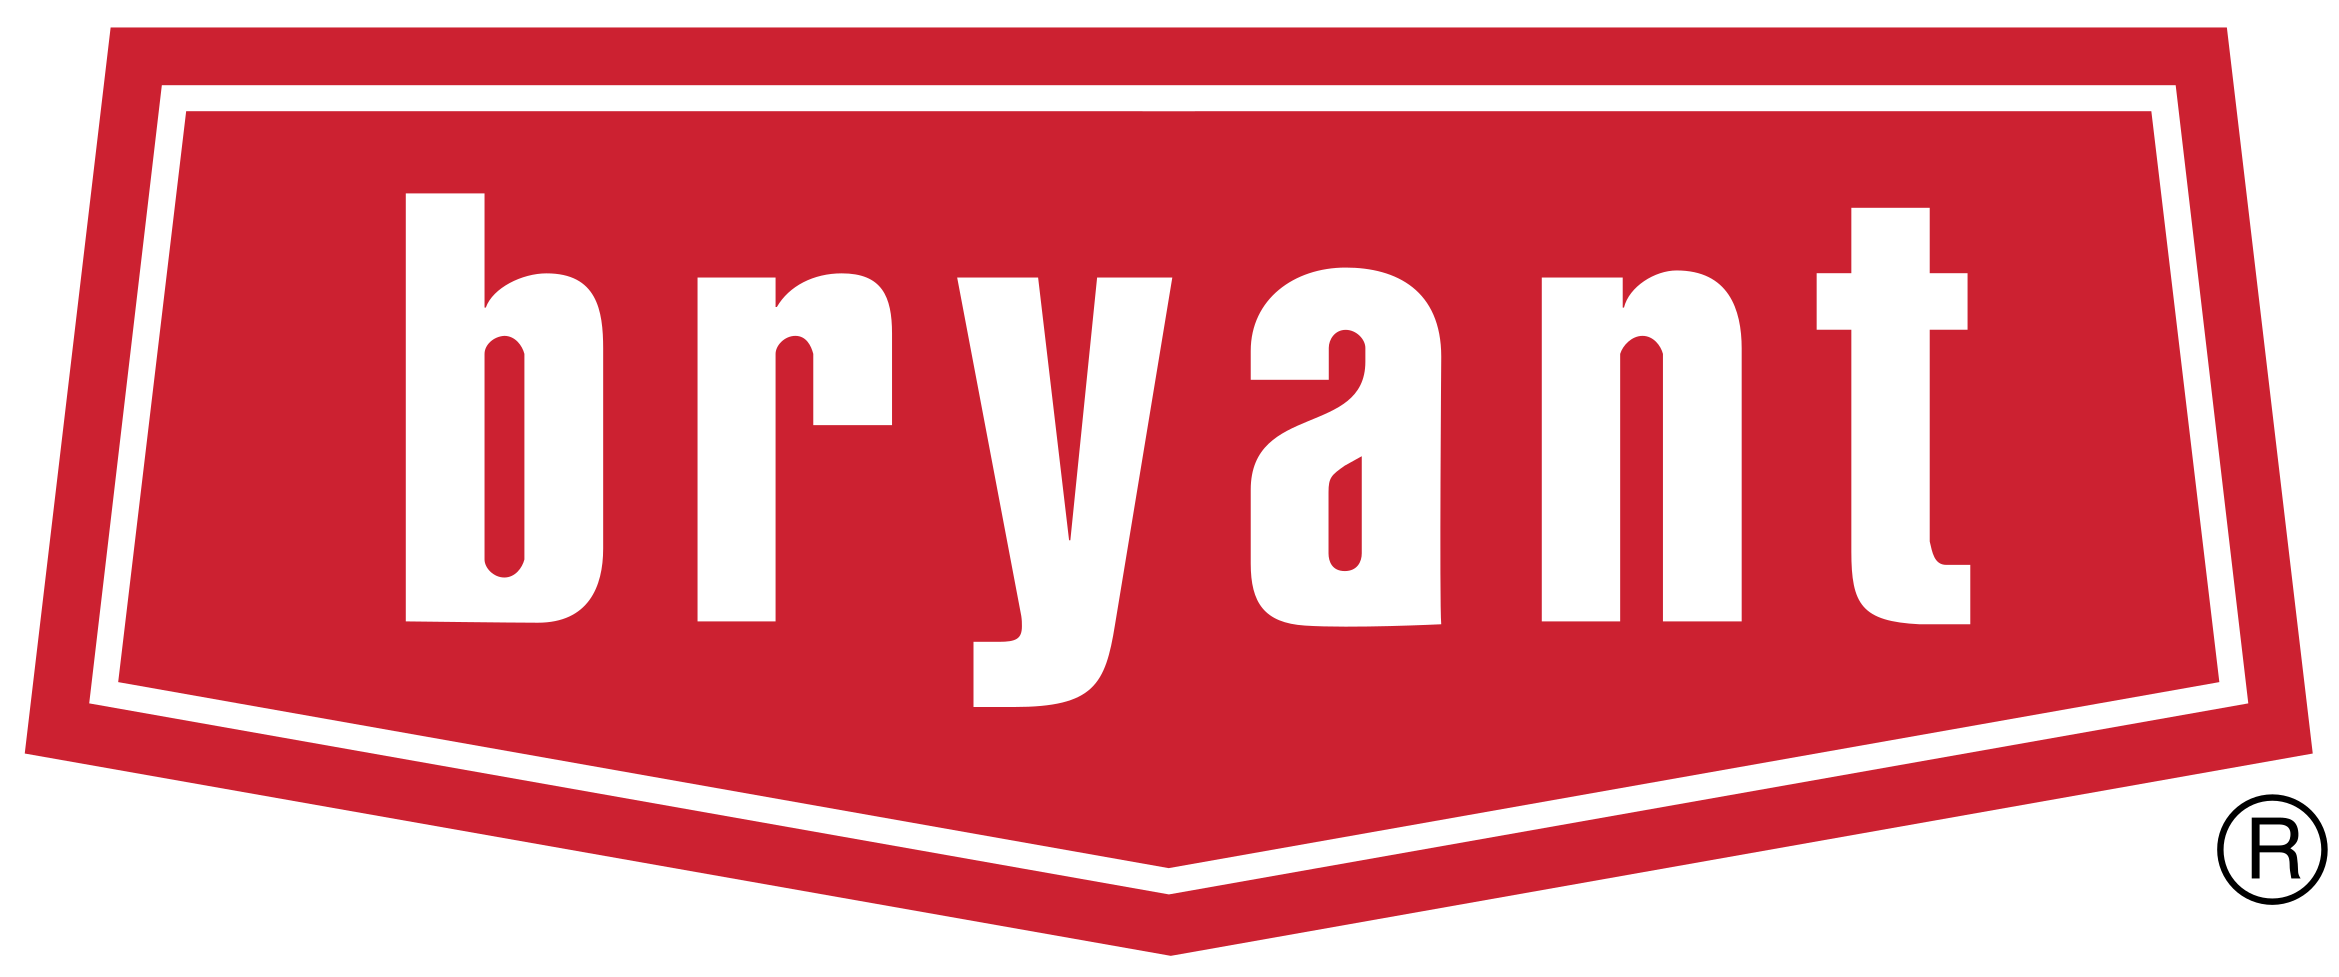 bryant 01 logo png transparent 1